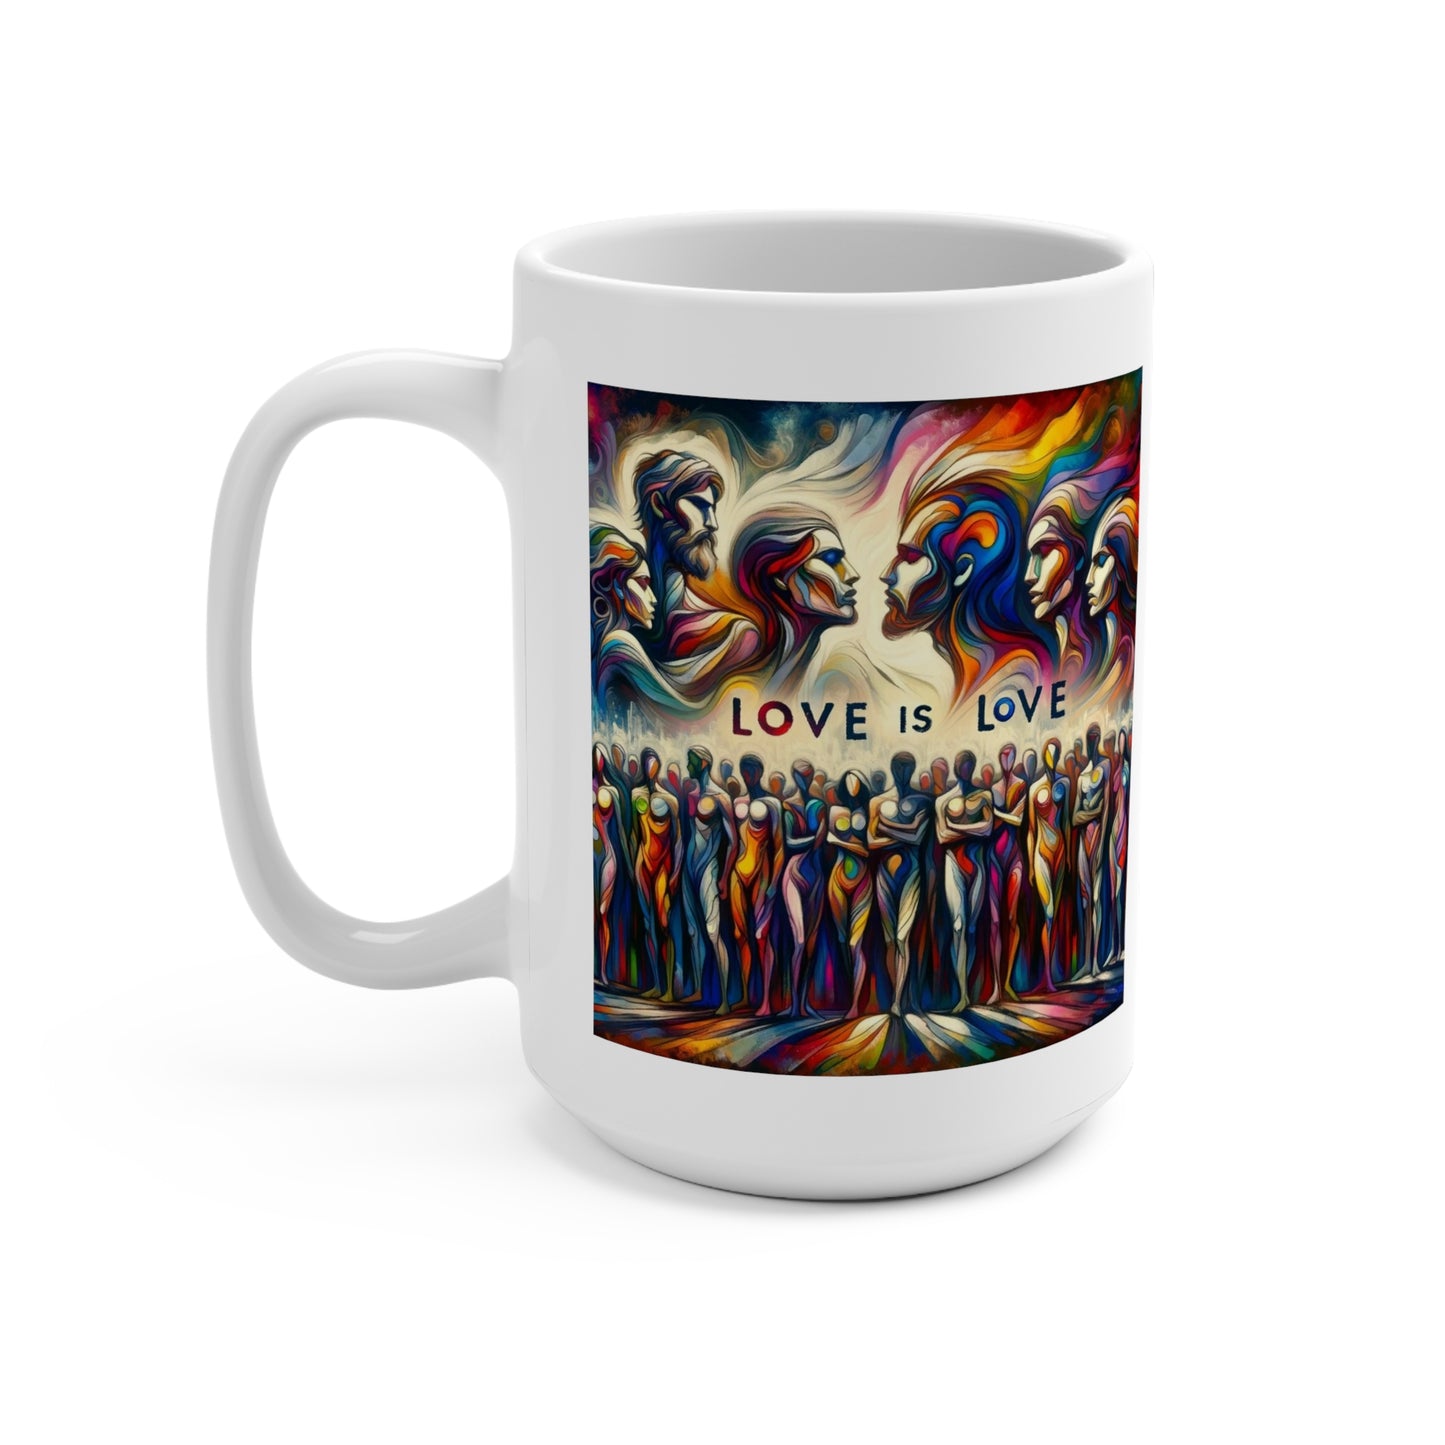 Inspirational Ceramic Mug: Love is Love (15oz)